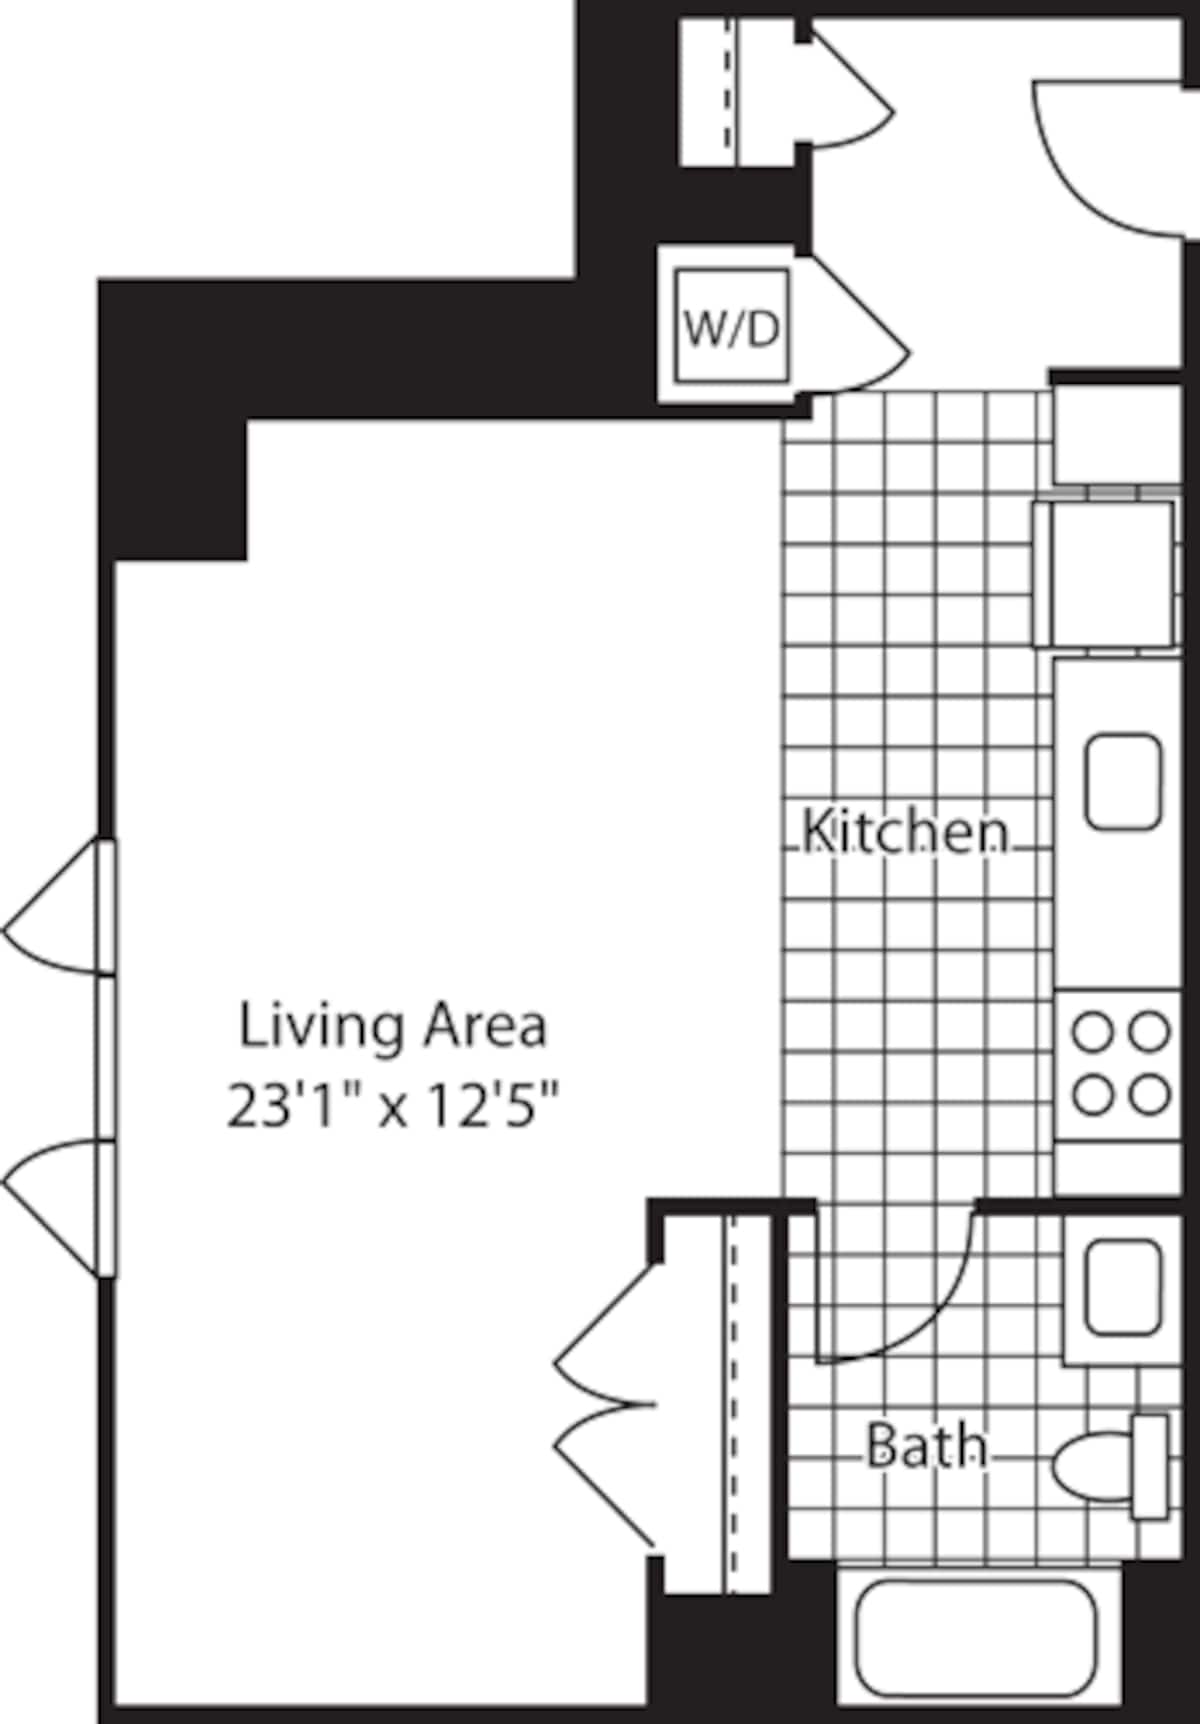 Floorplan diagram for Studio (North)- 535, showing Studio